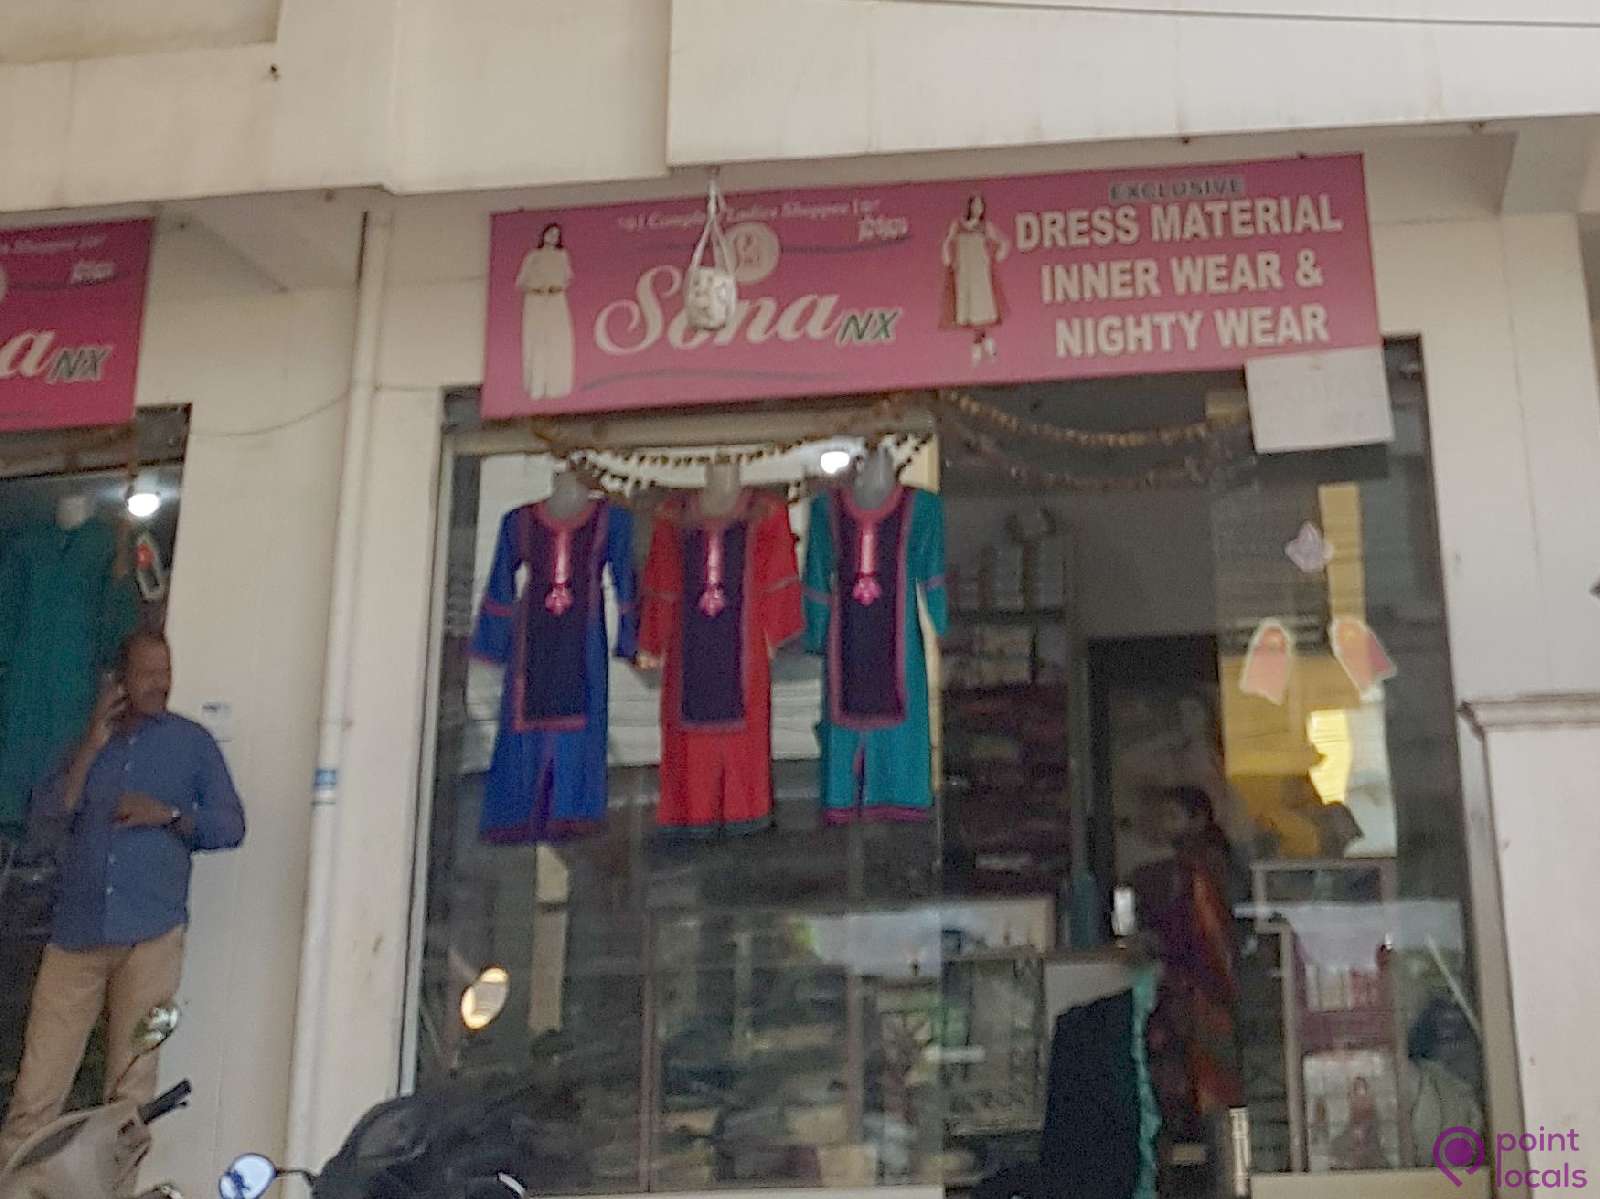 Sona NX Tops & Inner Wear - Clothing Shop in Hyderabad,Telangana